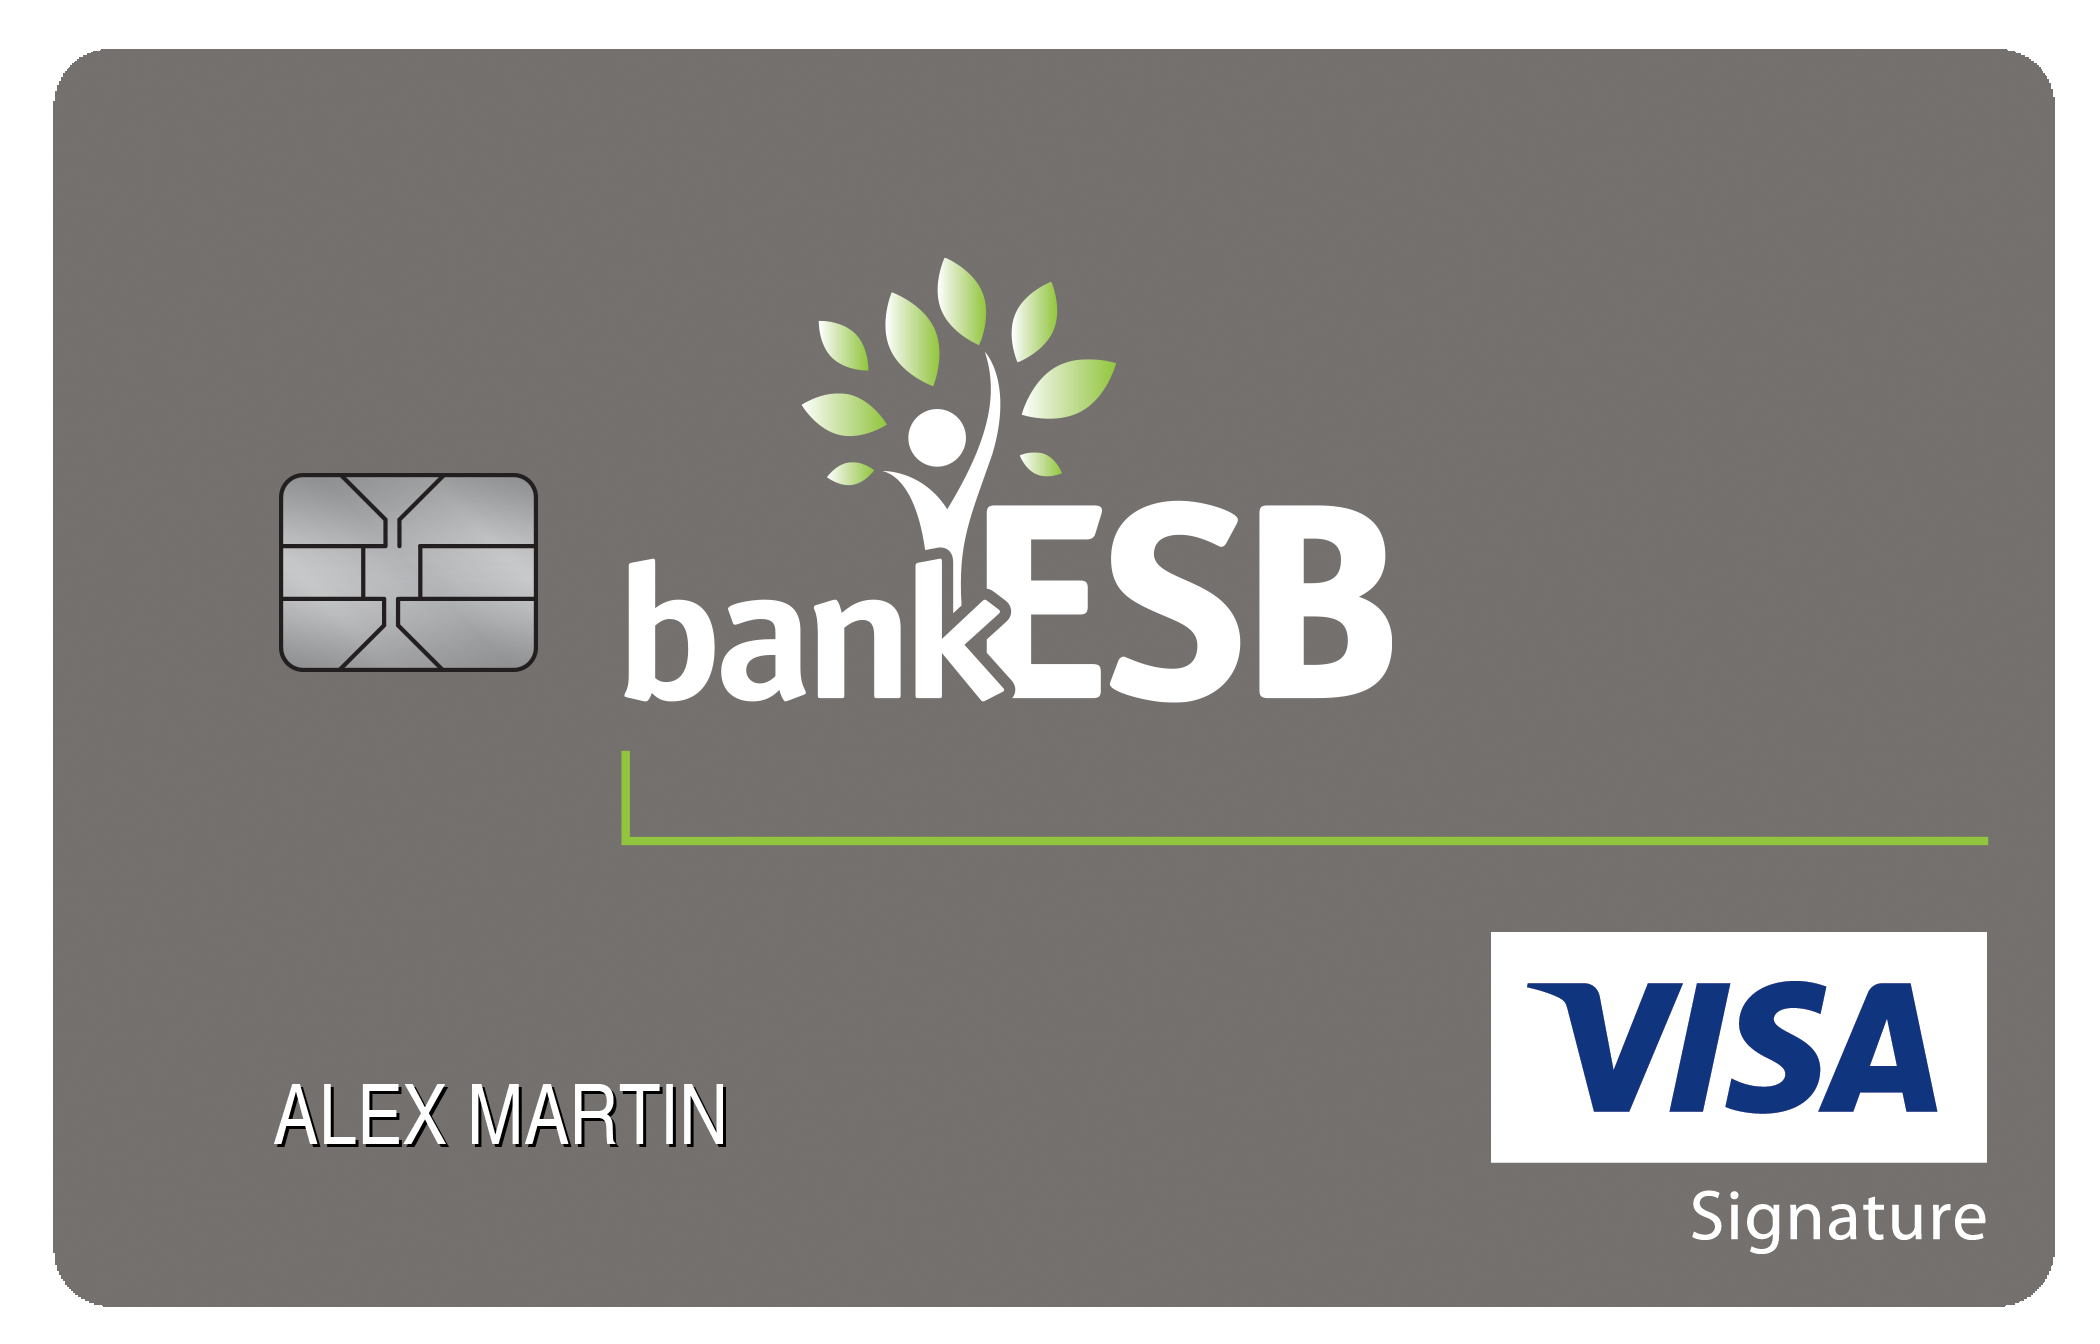 bankESB Max Cash Preferred Card